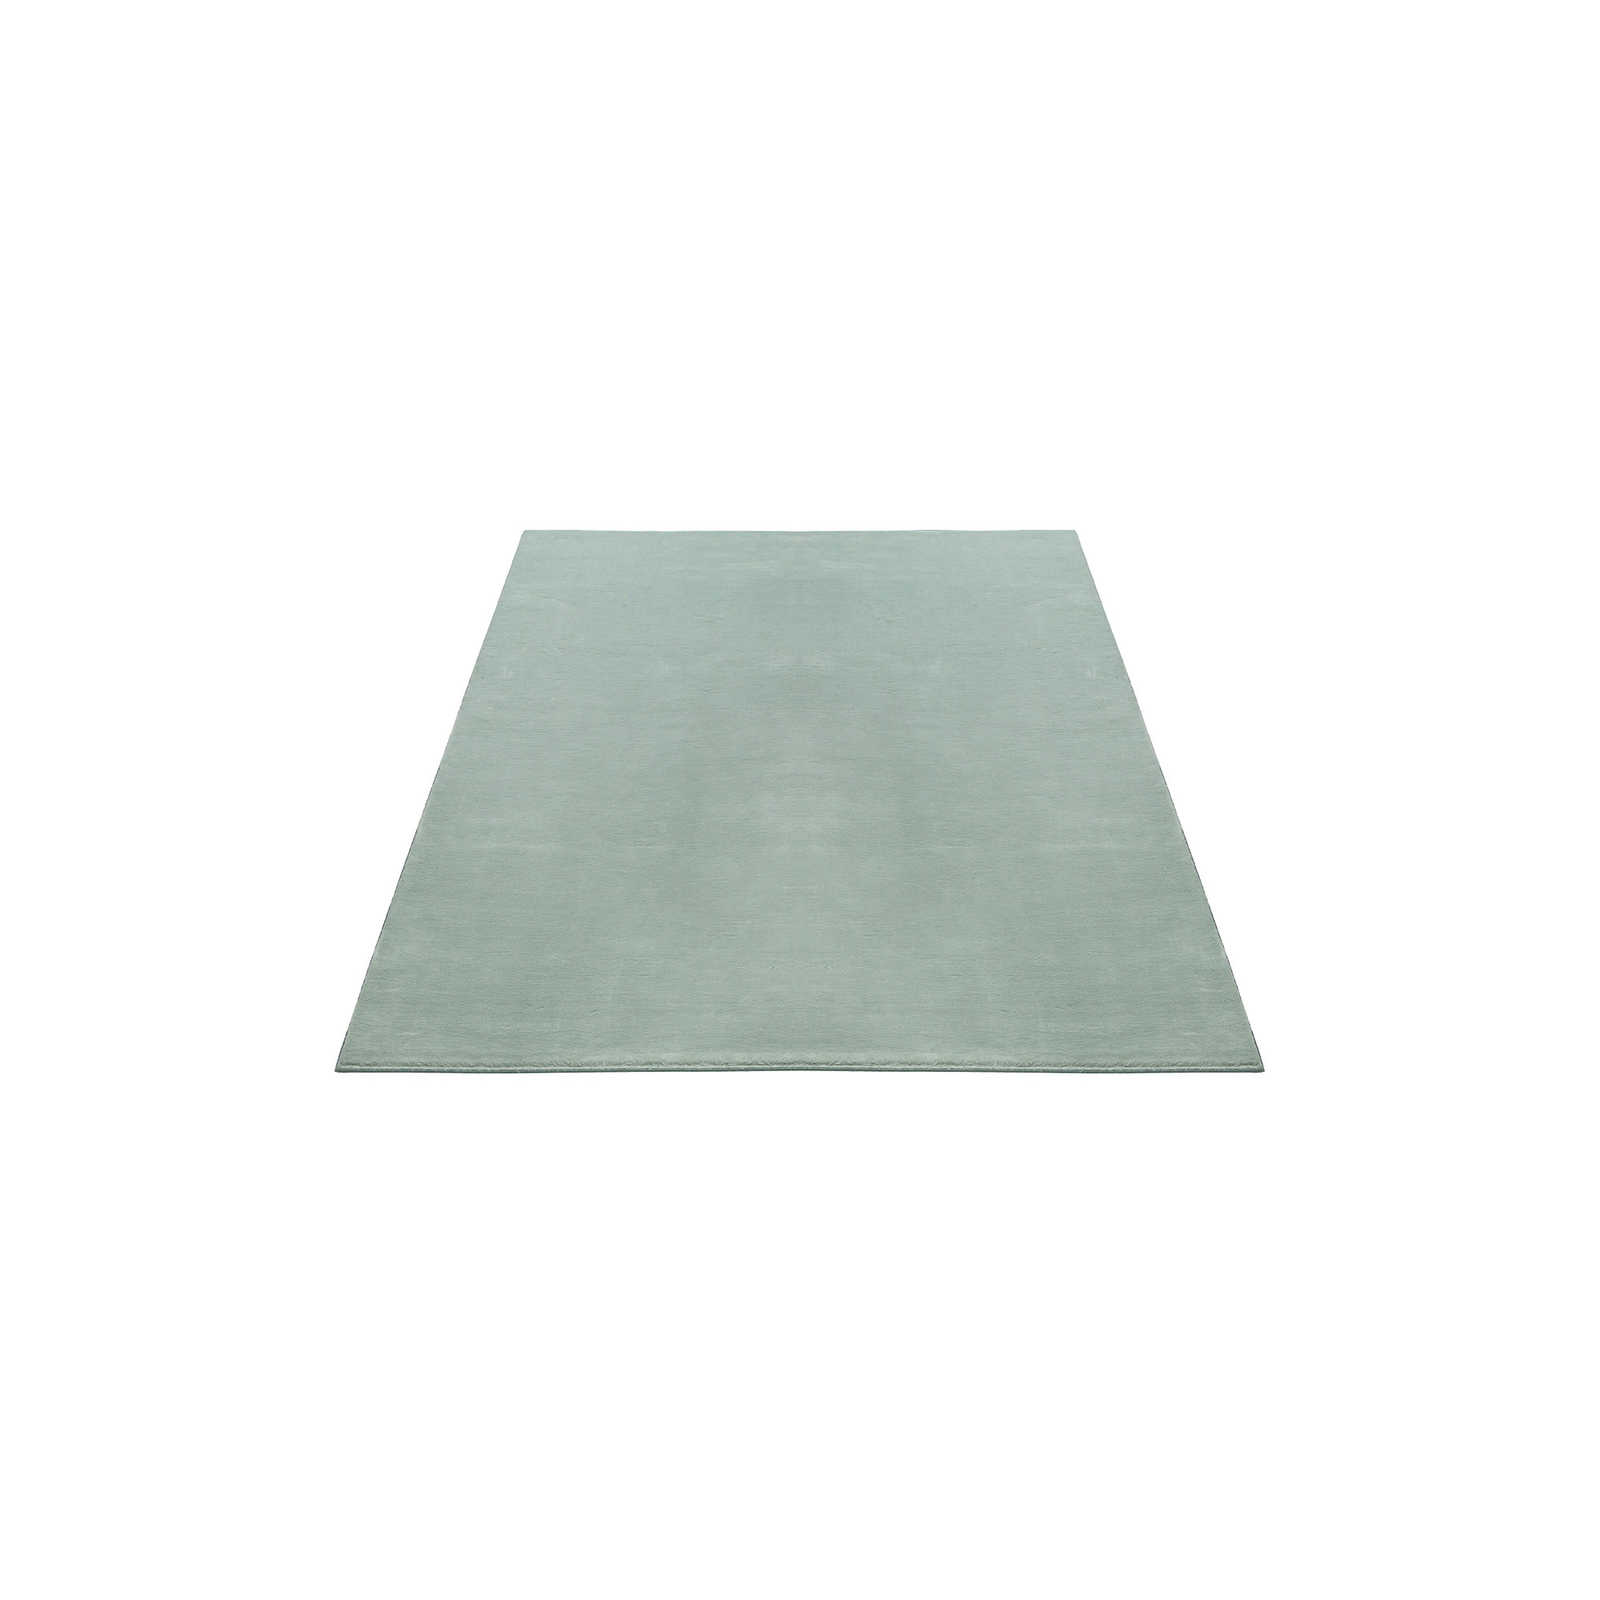 Soft high pile carpet in soft green - 170 x 120 cm
